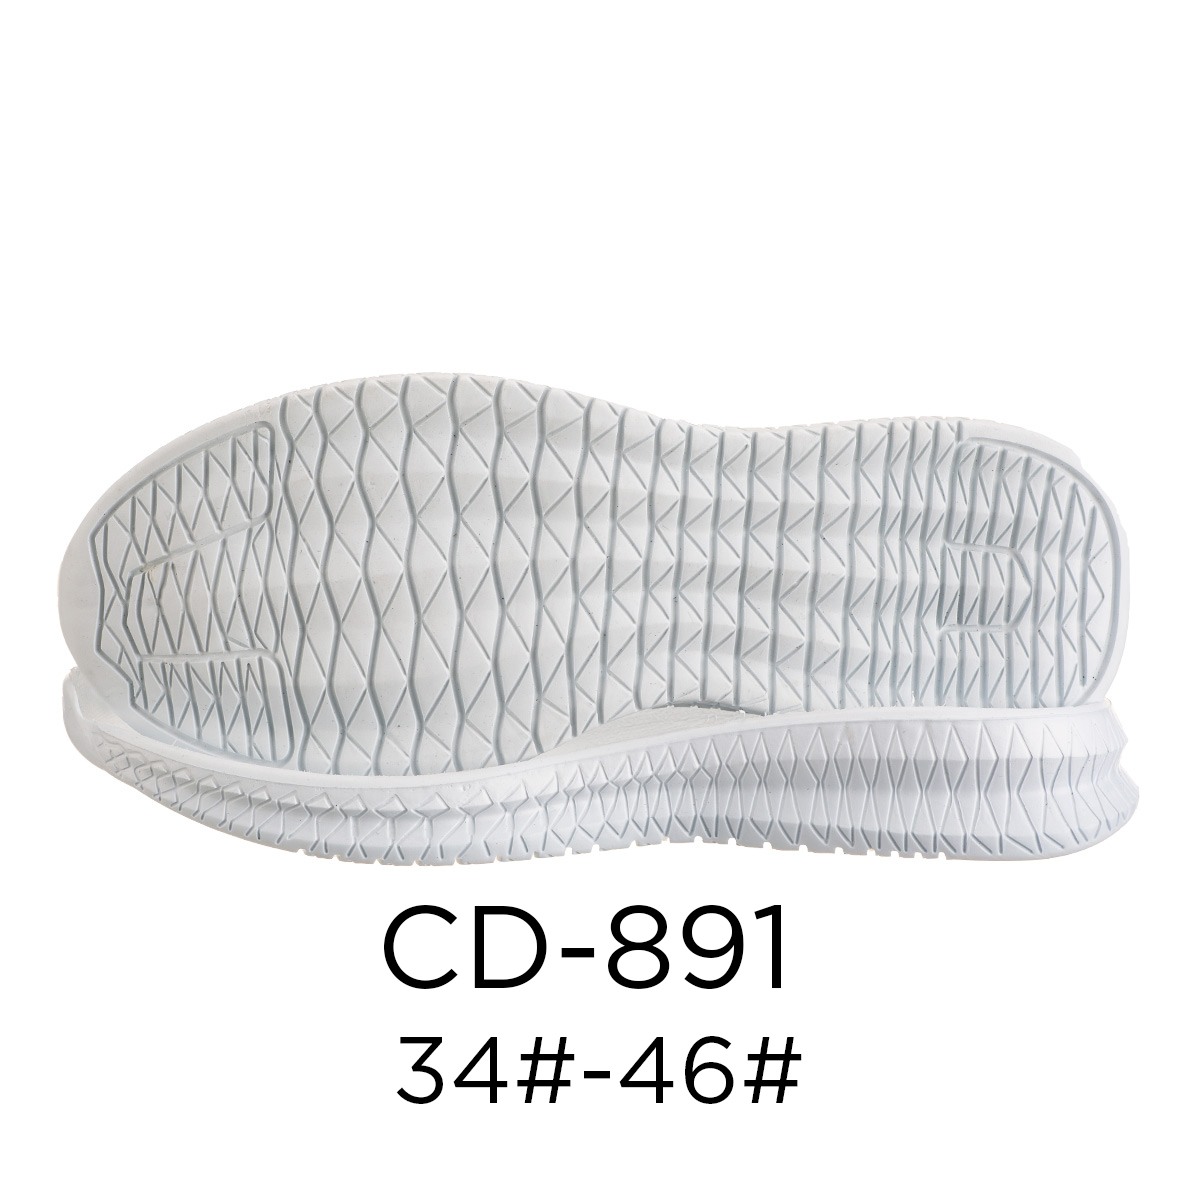 CD-891